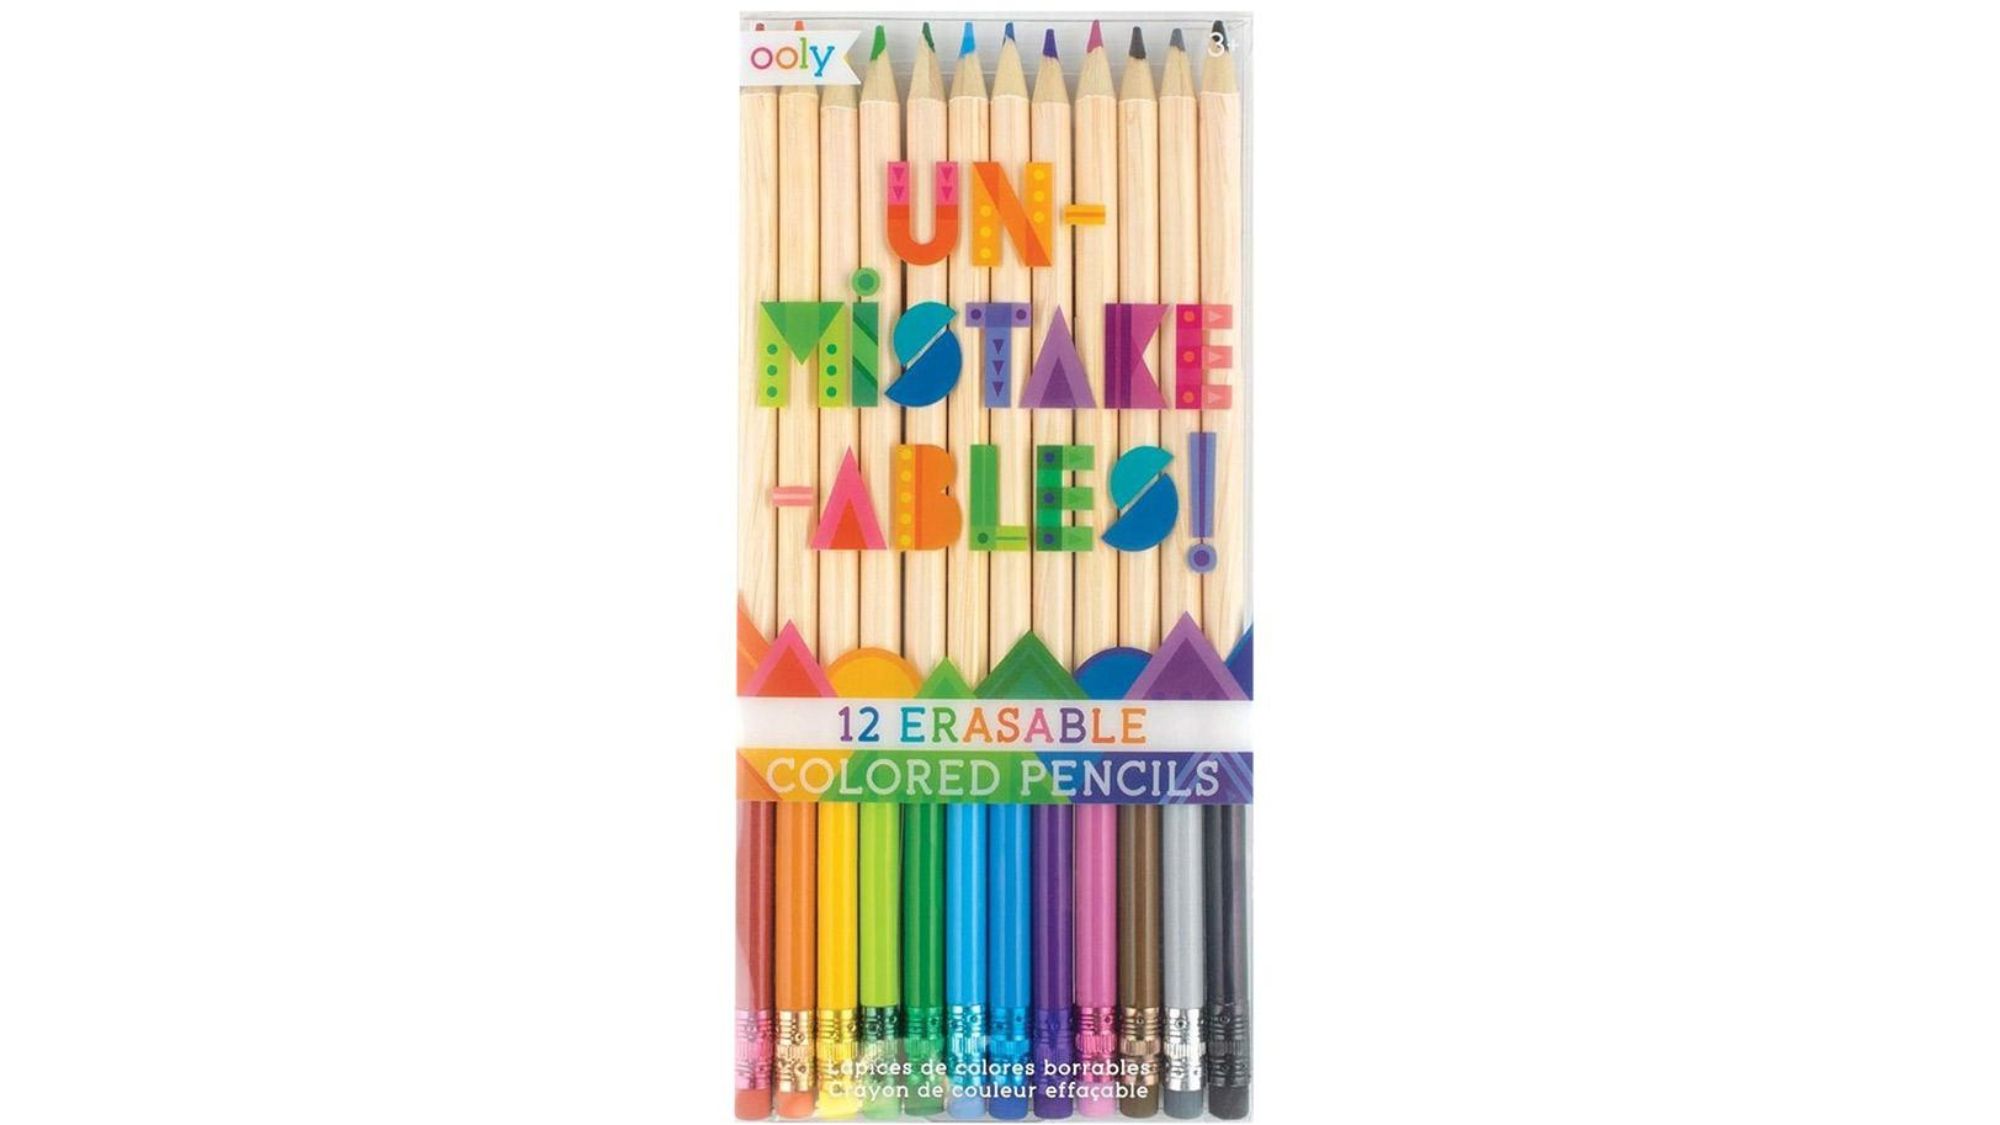 Ooly UnMistakeAbles Erasable Pencils